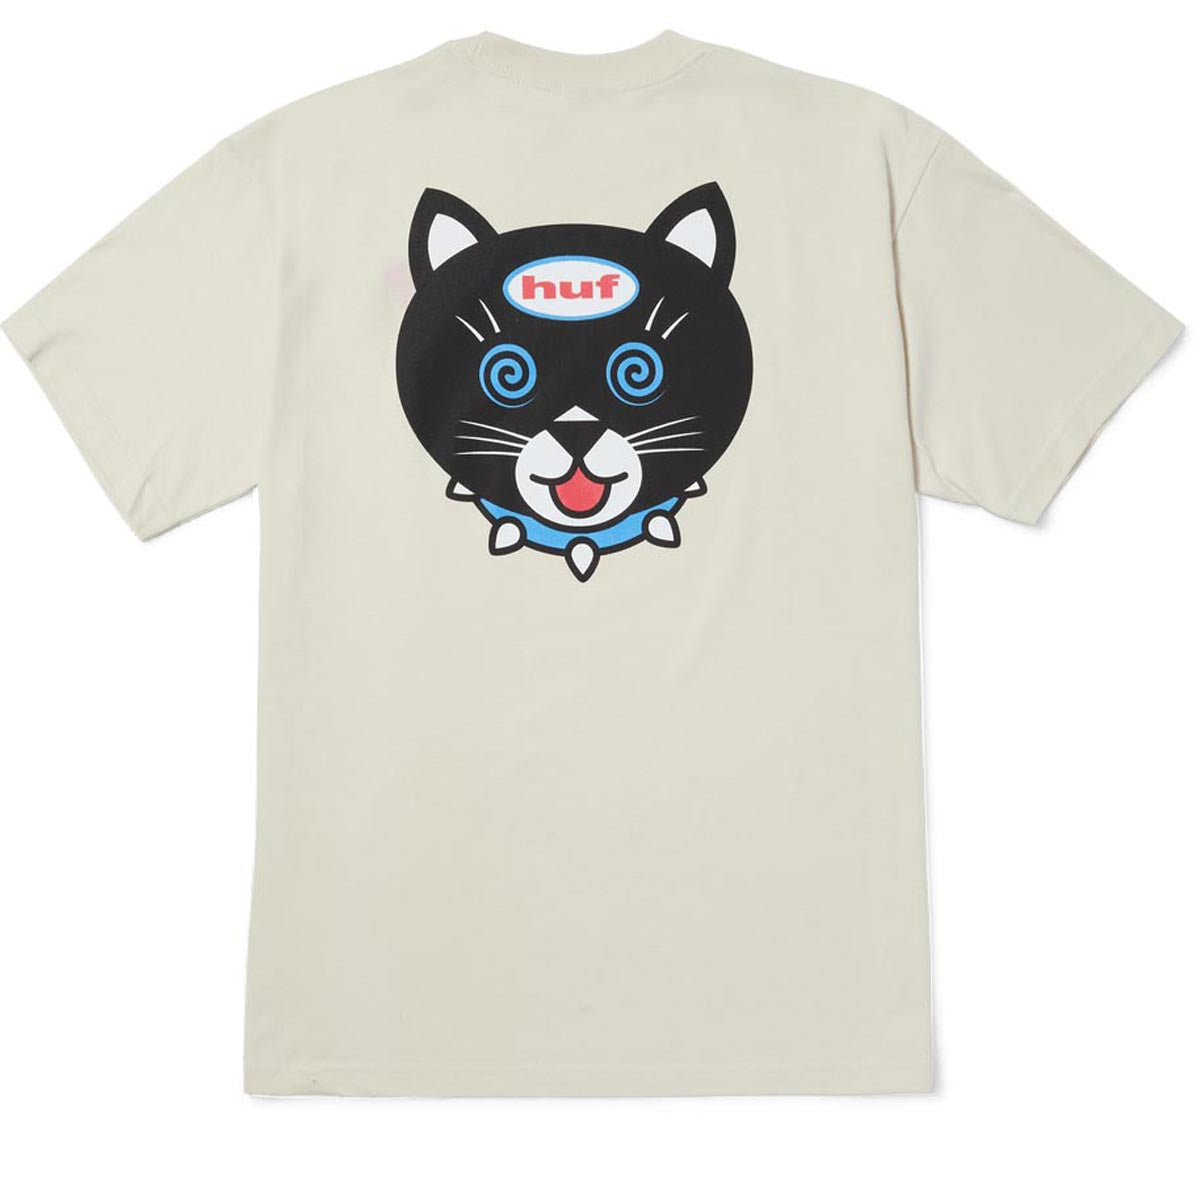 HUF Hypno Cat T-Shirt - Bone image 1